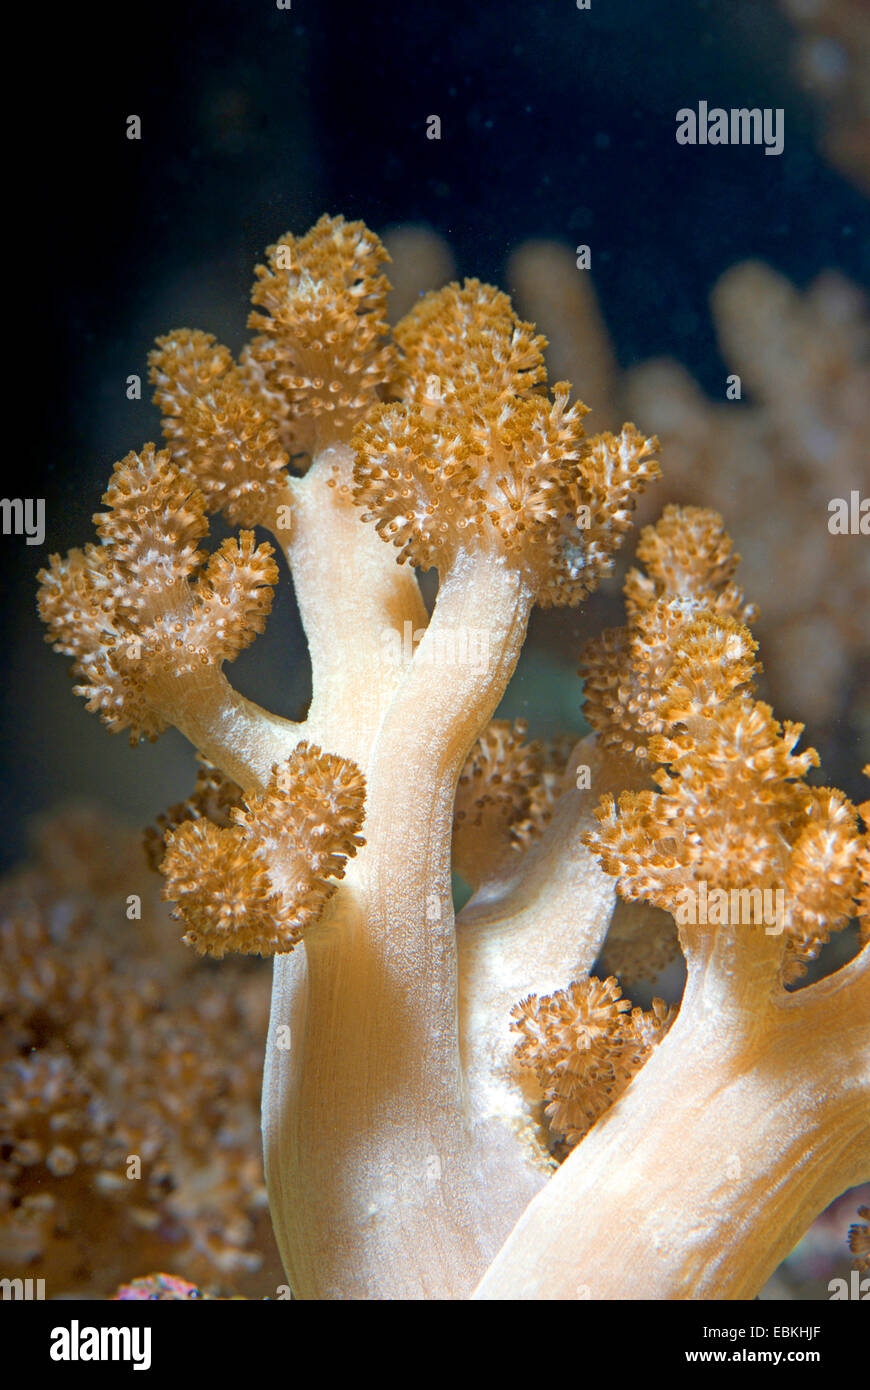 Soft coral (Cladiella spec.), close-up view Stock Photo